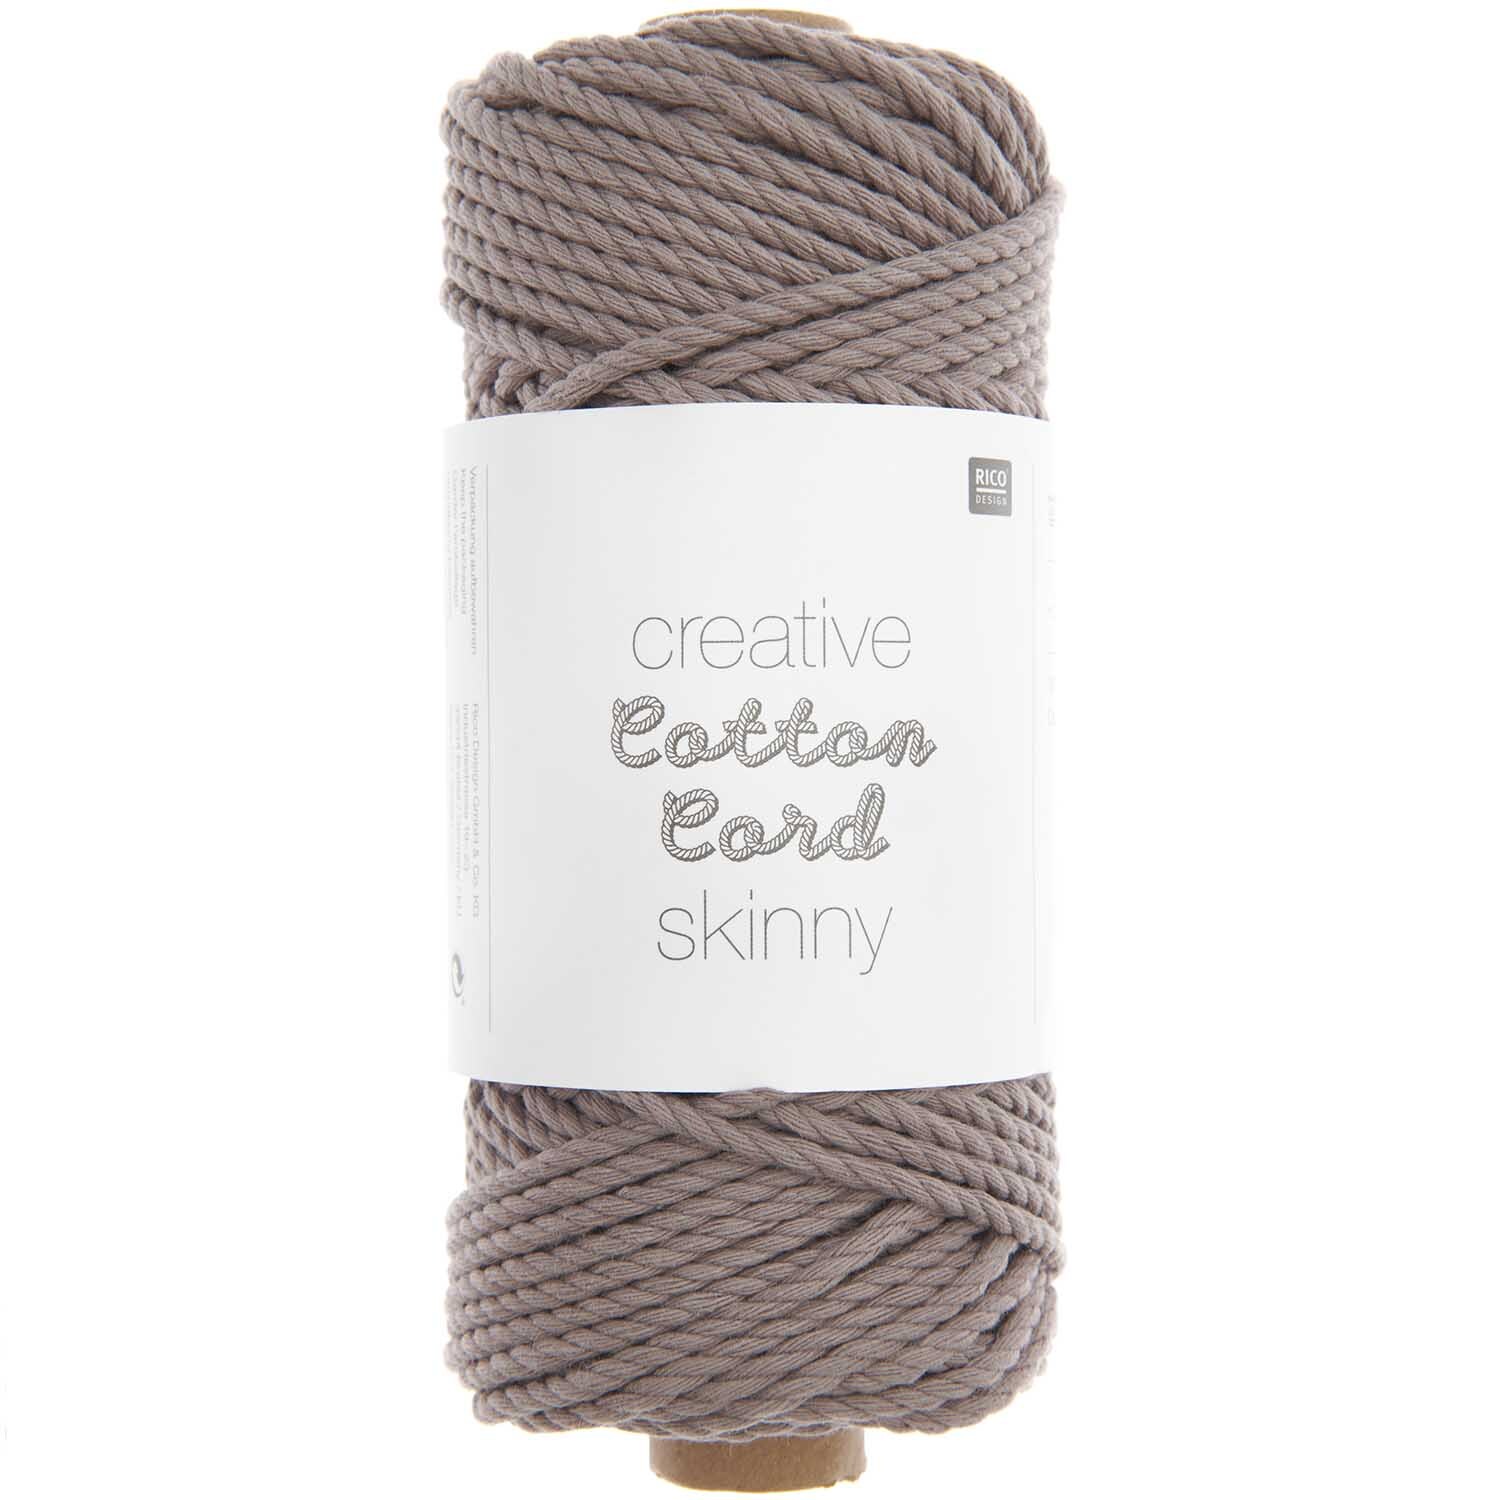 Creative Cotton Cord skinny Makramee-Garn